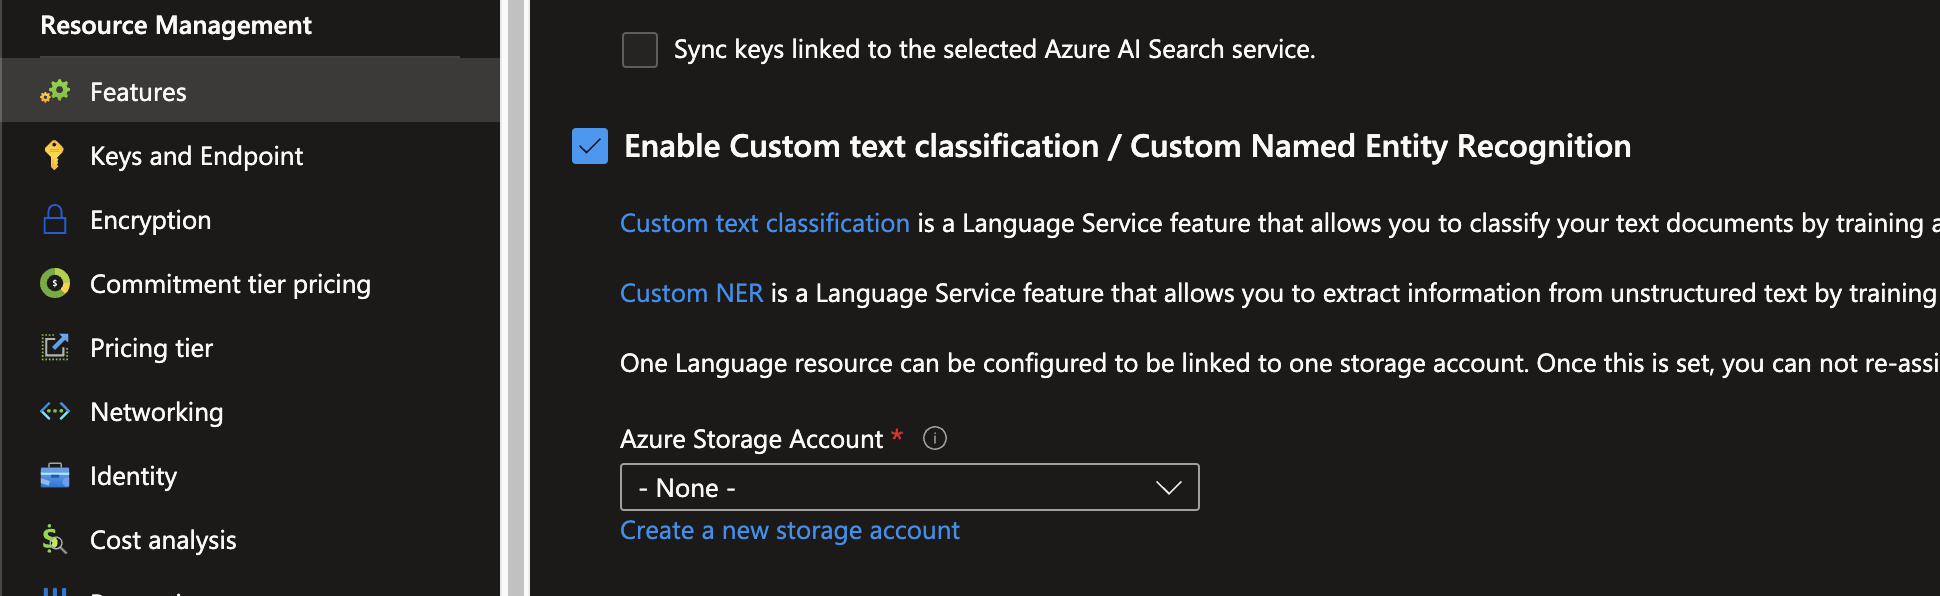 Azure Language Service Features page